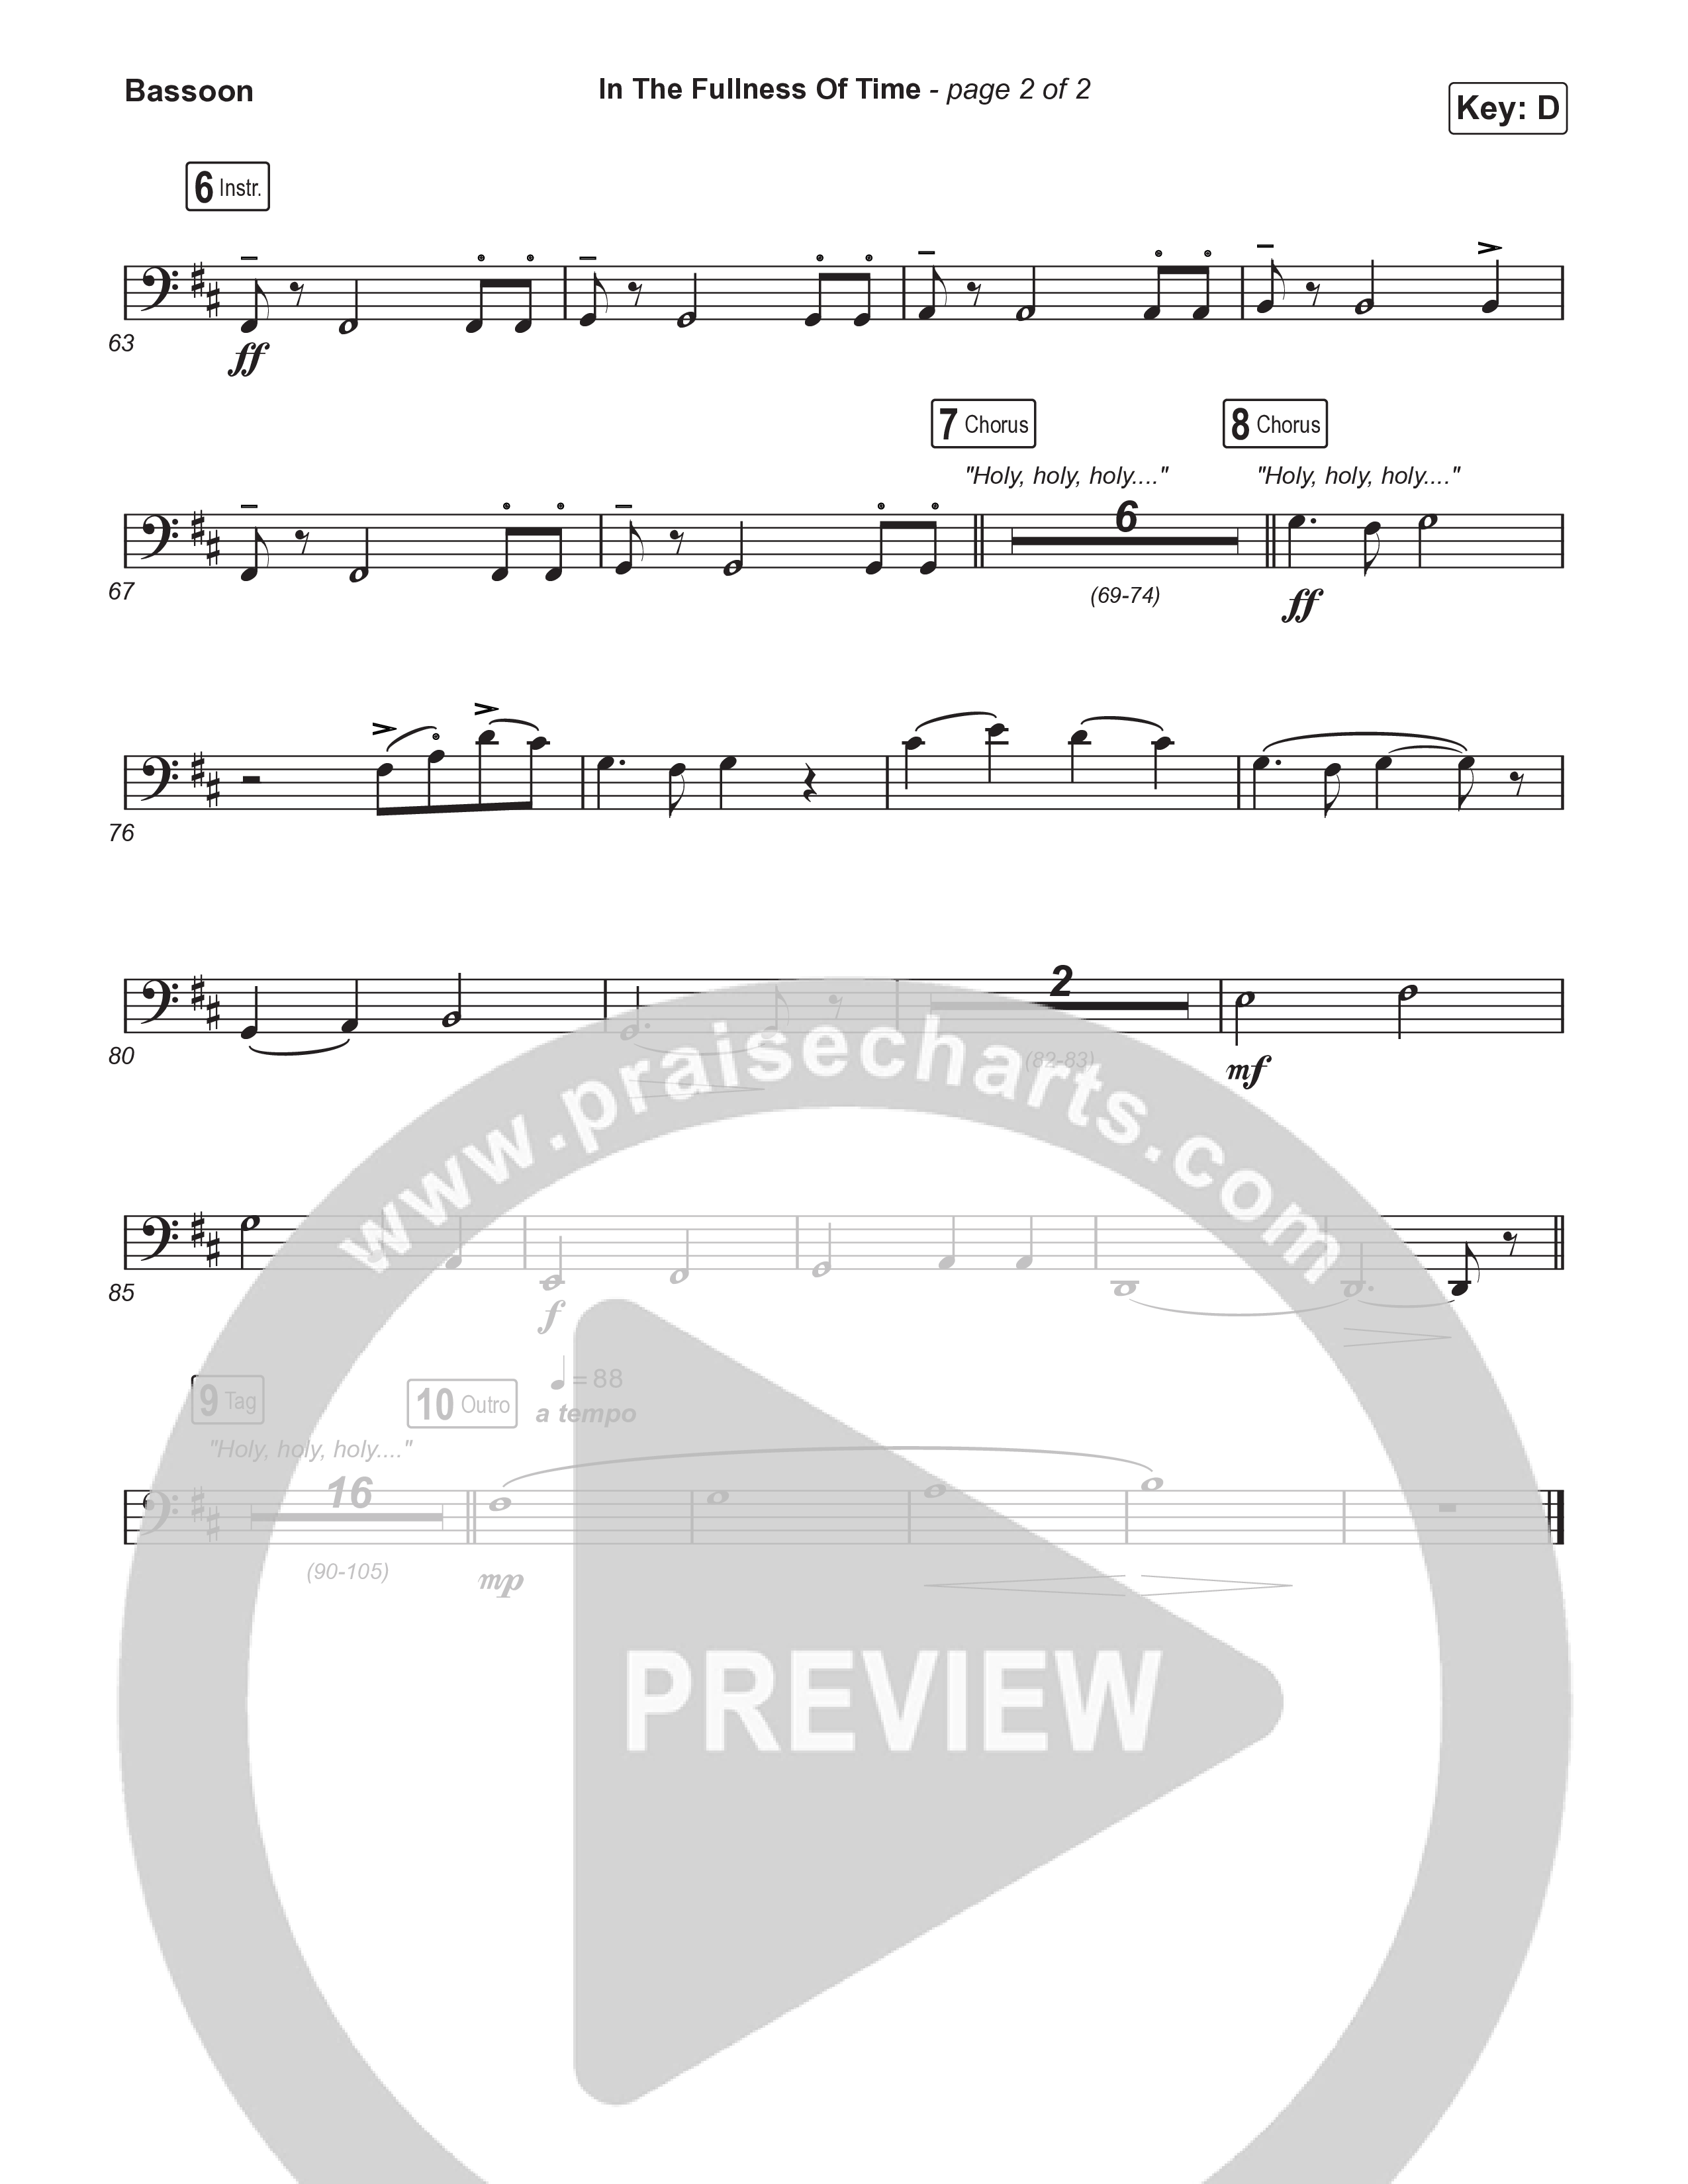 In The Fullness Of Time (Choral Anthem SATB) Bassoon (Matt Papa / Matt Boswell / Arr. Luke Gambill)